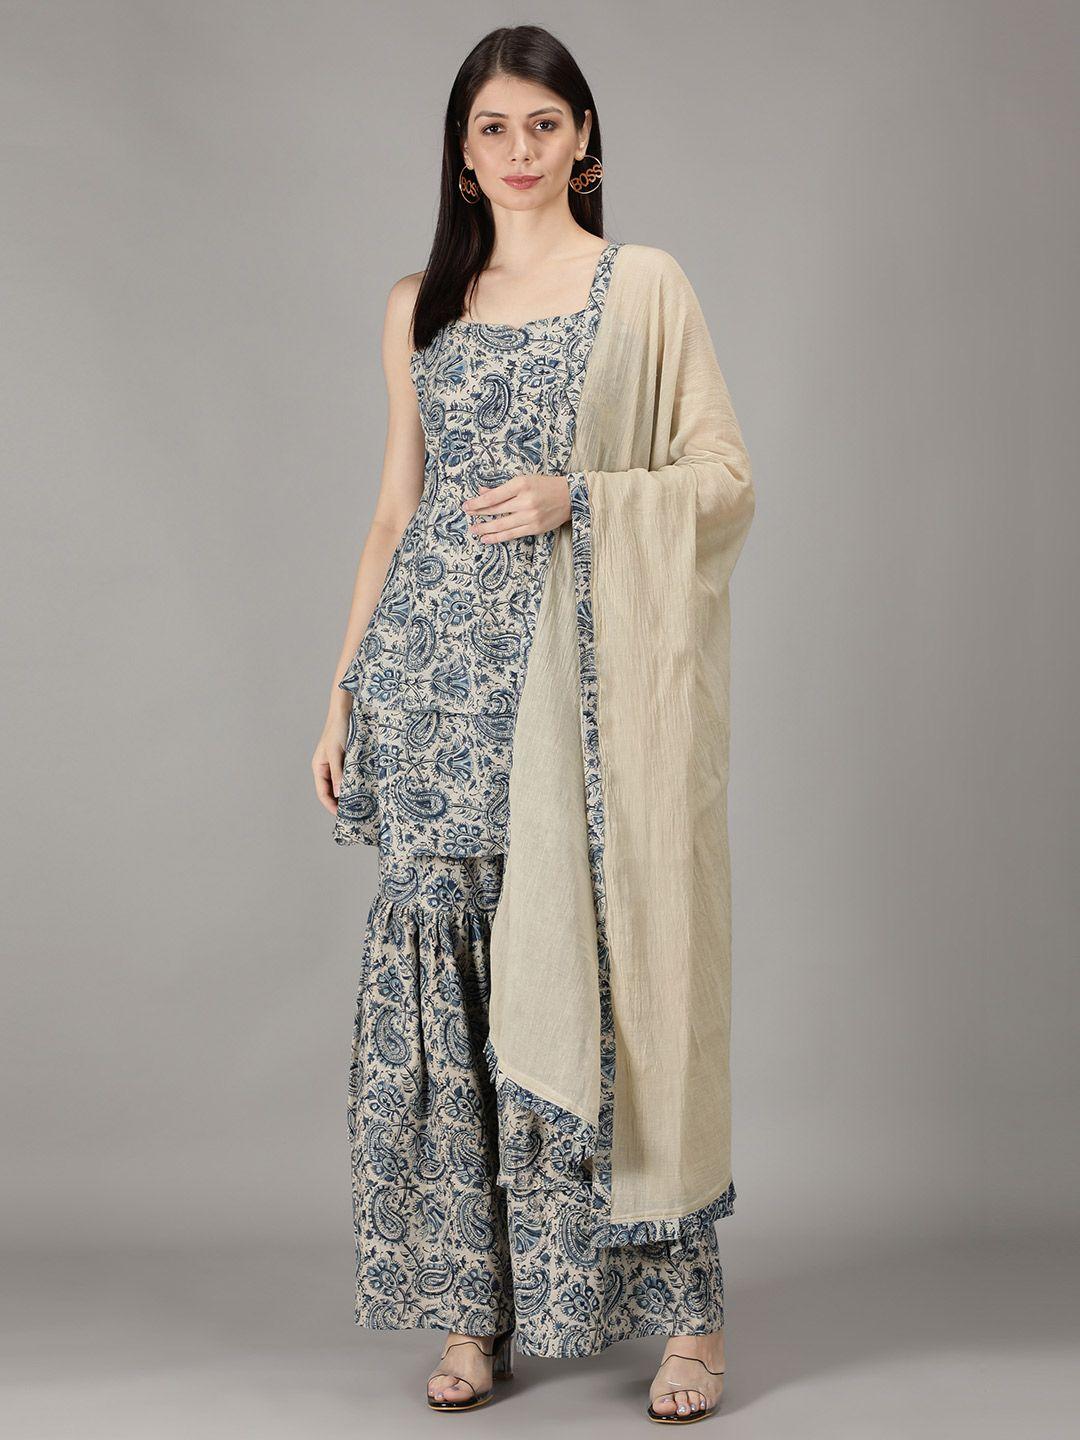 sajke women blue paisley printed layered pure cotton kurti with sharara & dupatta